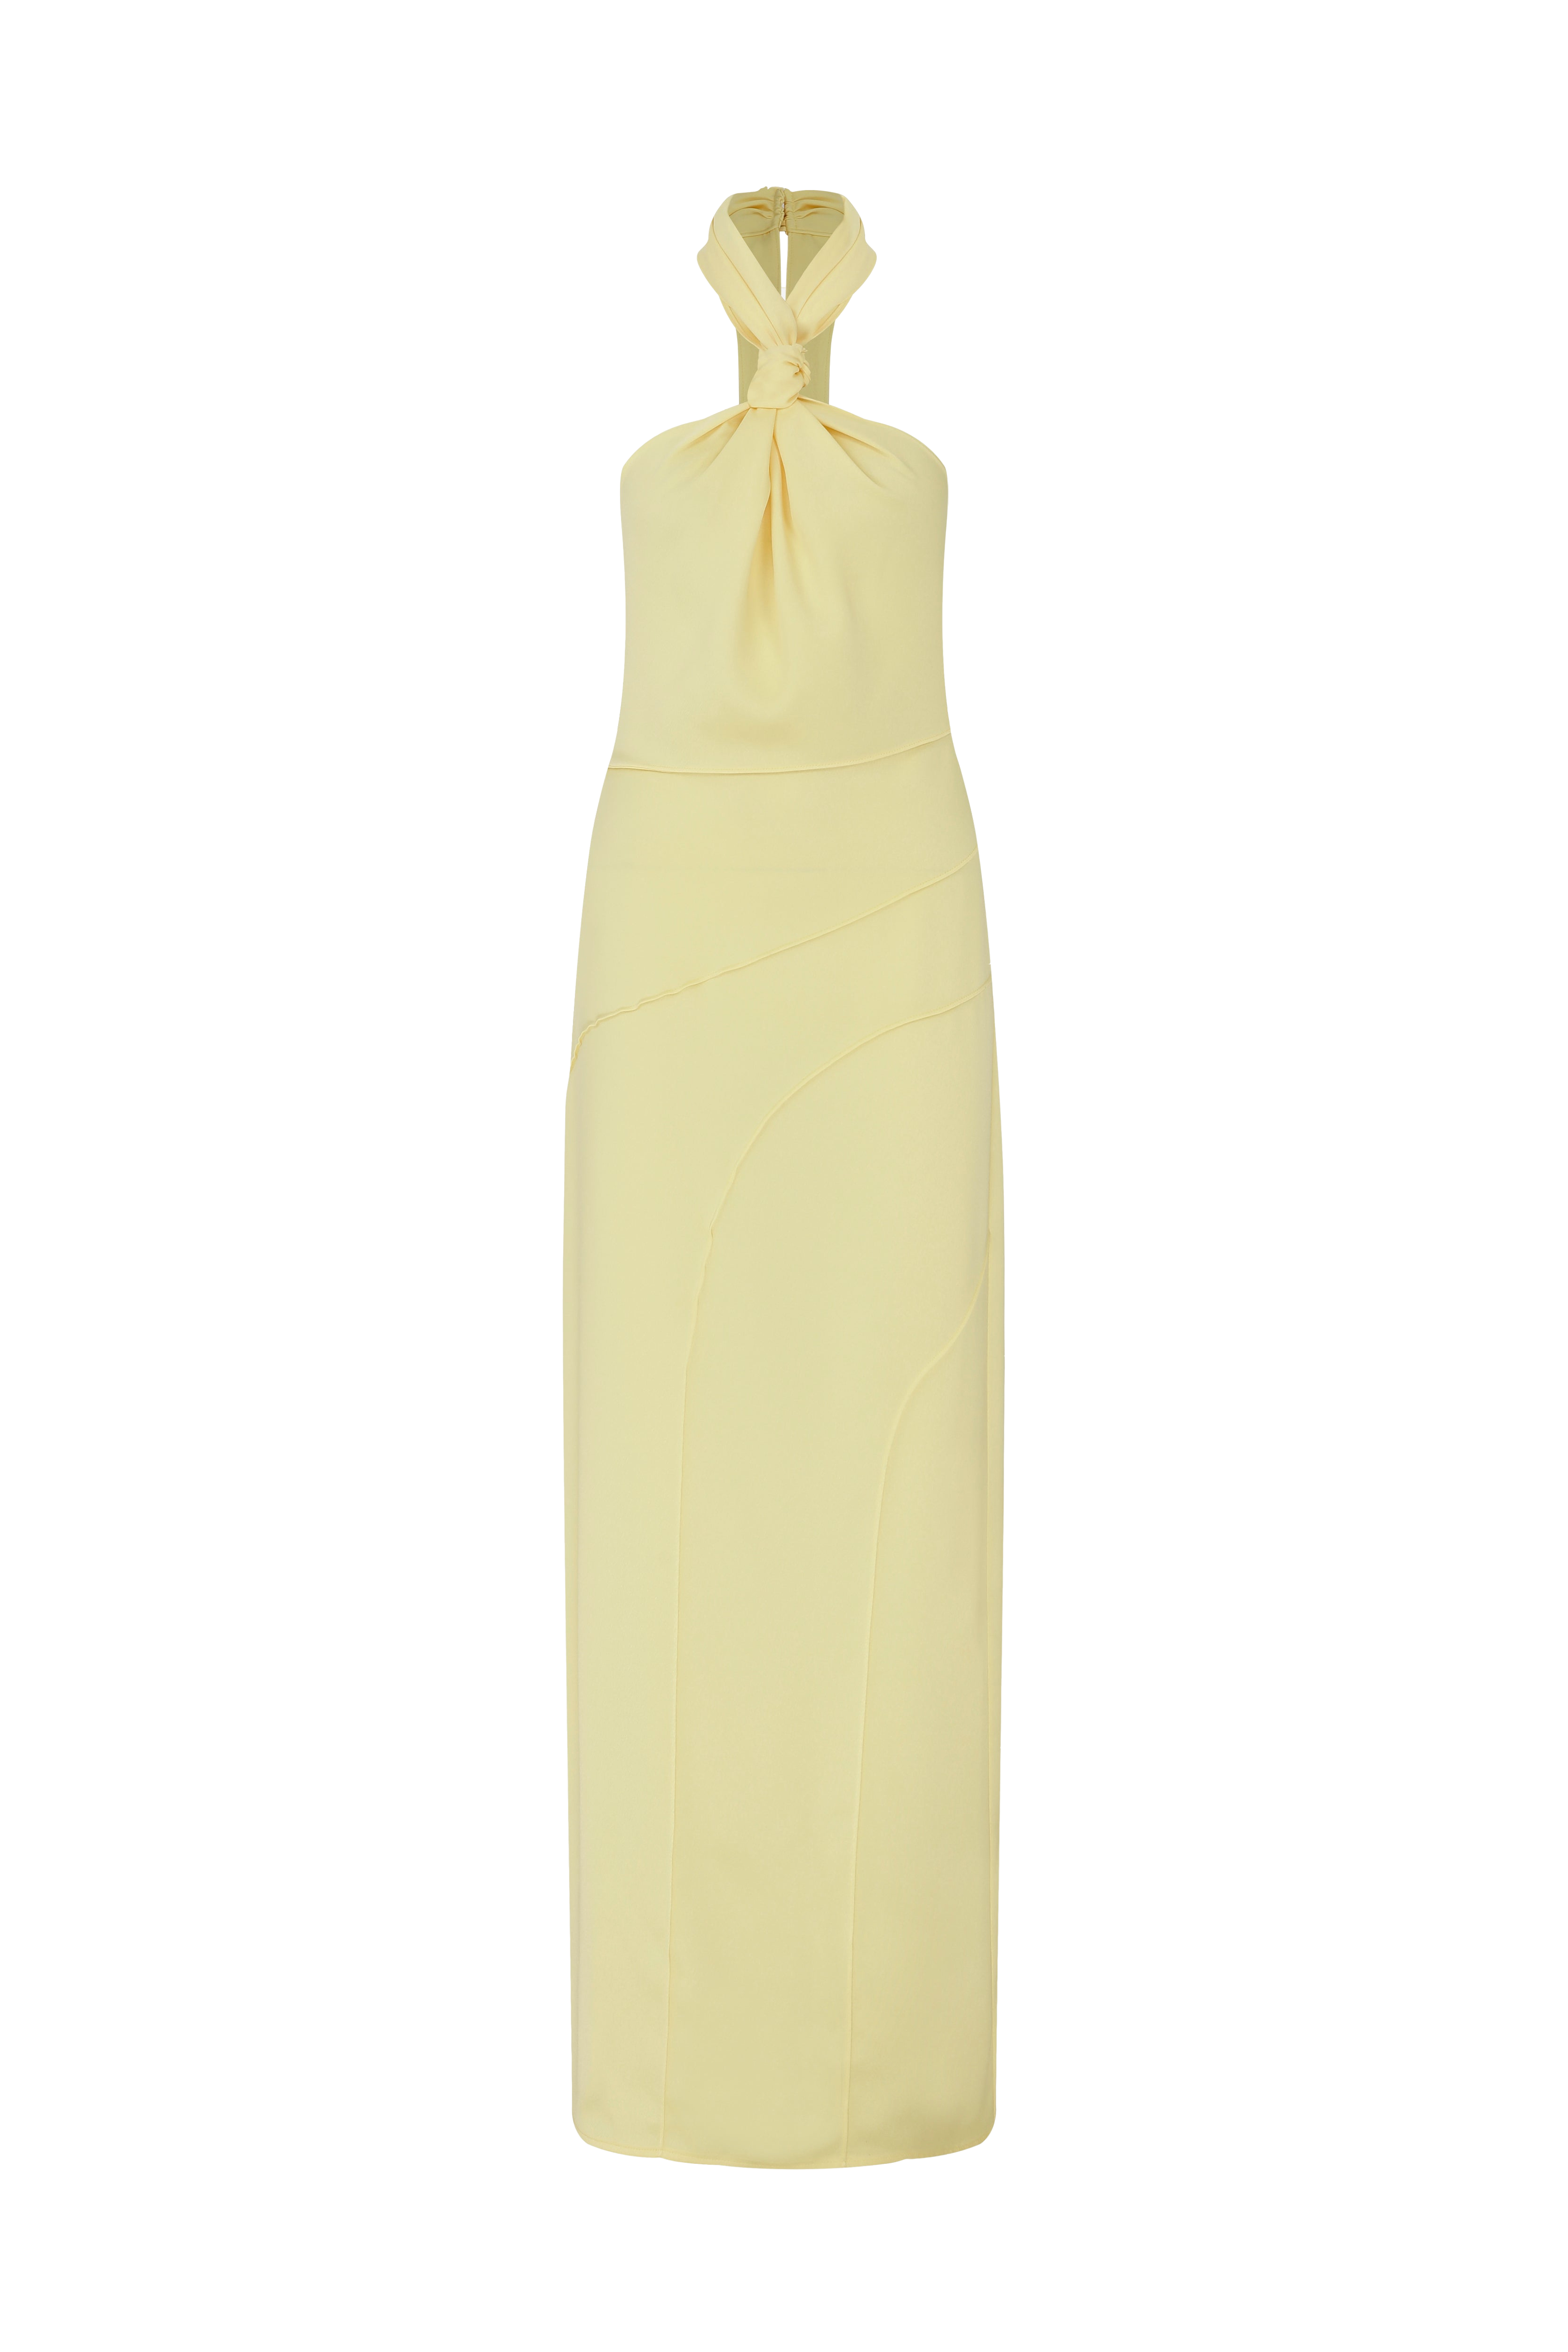 Shop Merce - Knotted Halterneck Maxi Dress from ILA at Seezona | Seezona